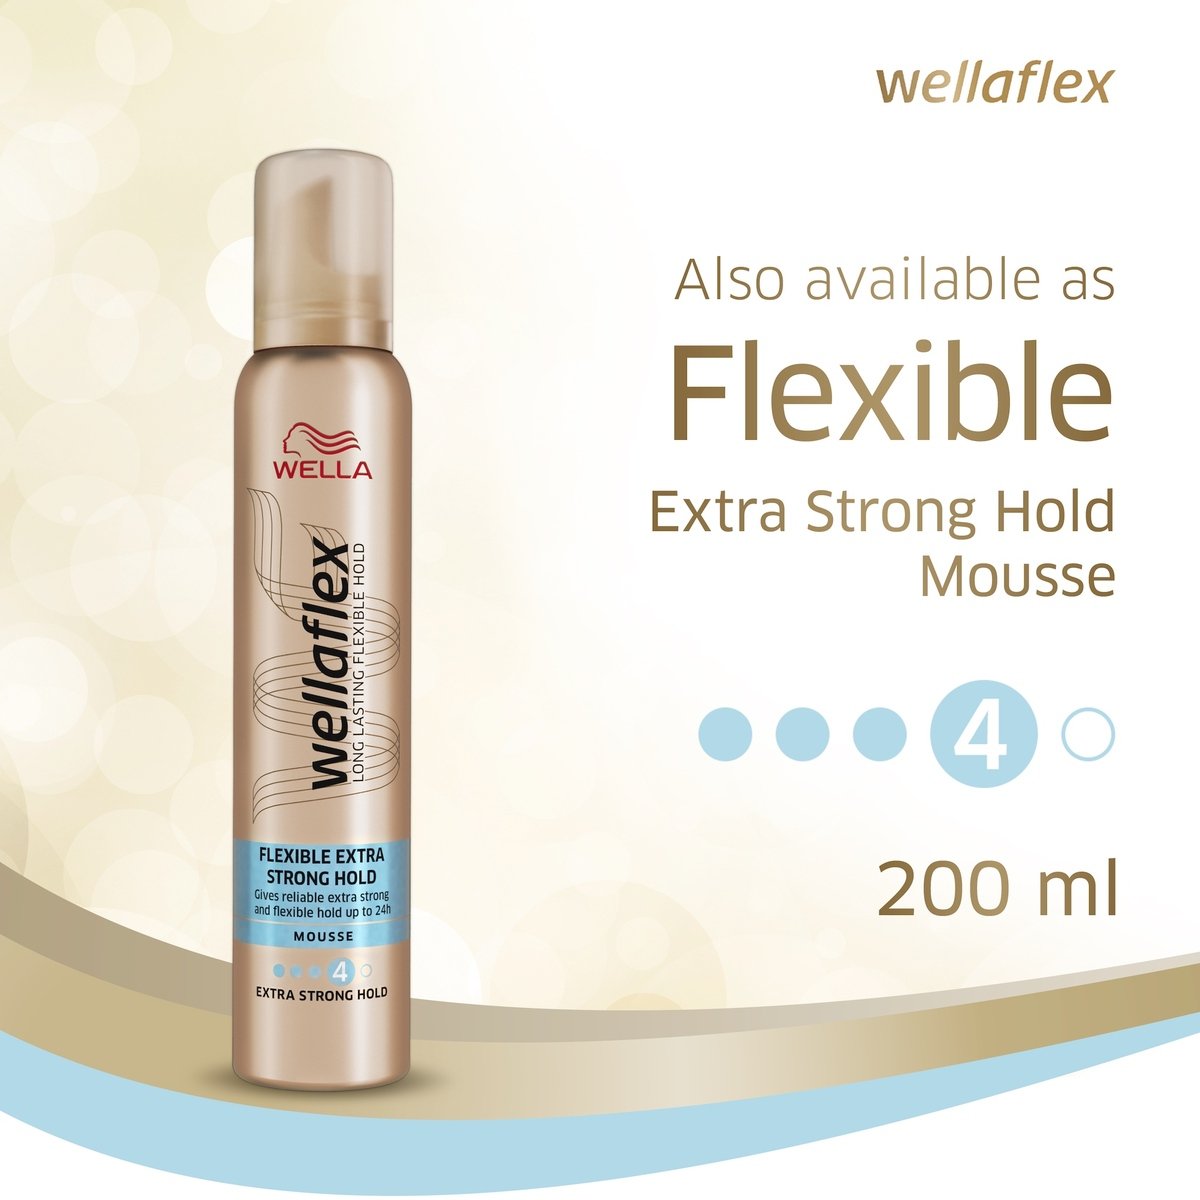 Wellaflex Flexible Extra Strong Hold Hairspray 250ml